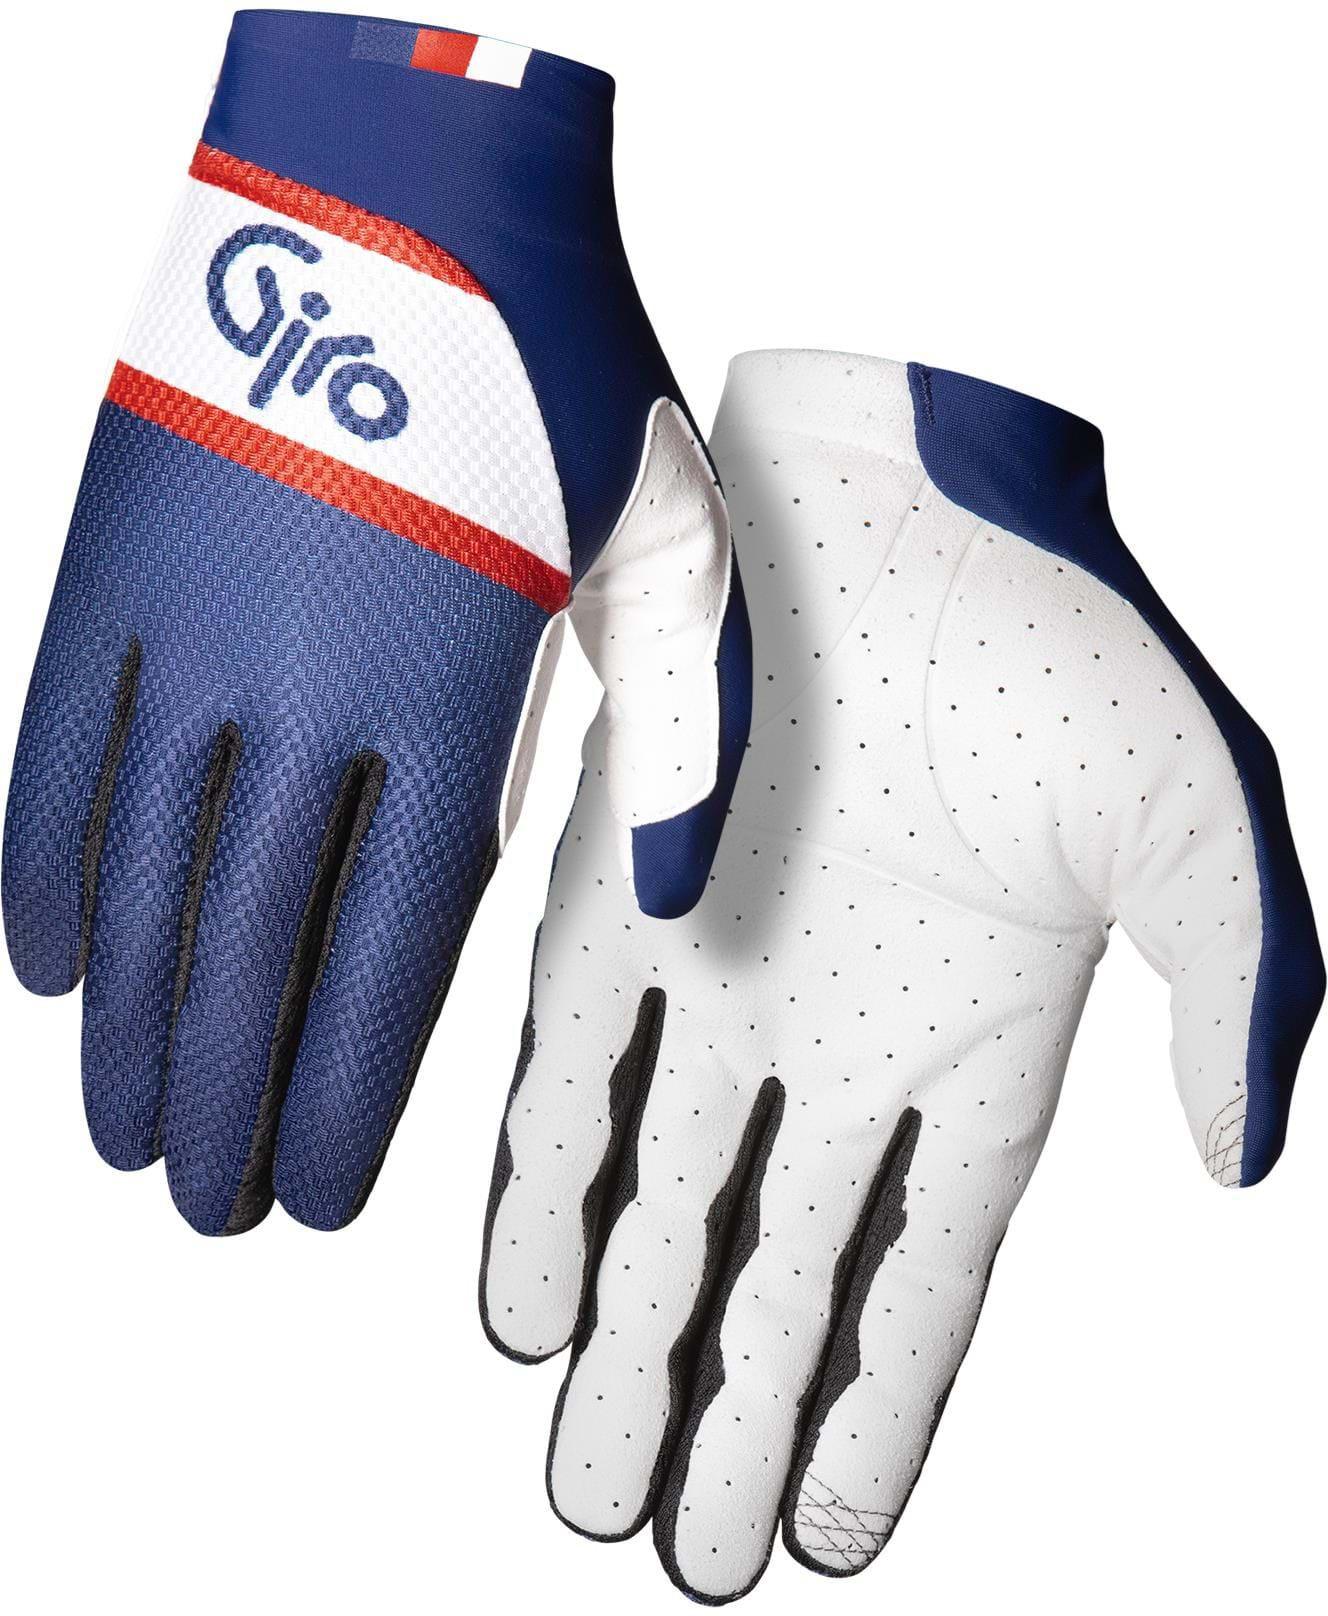 Giro Trixter Ff Gloves - Midnight Retro